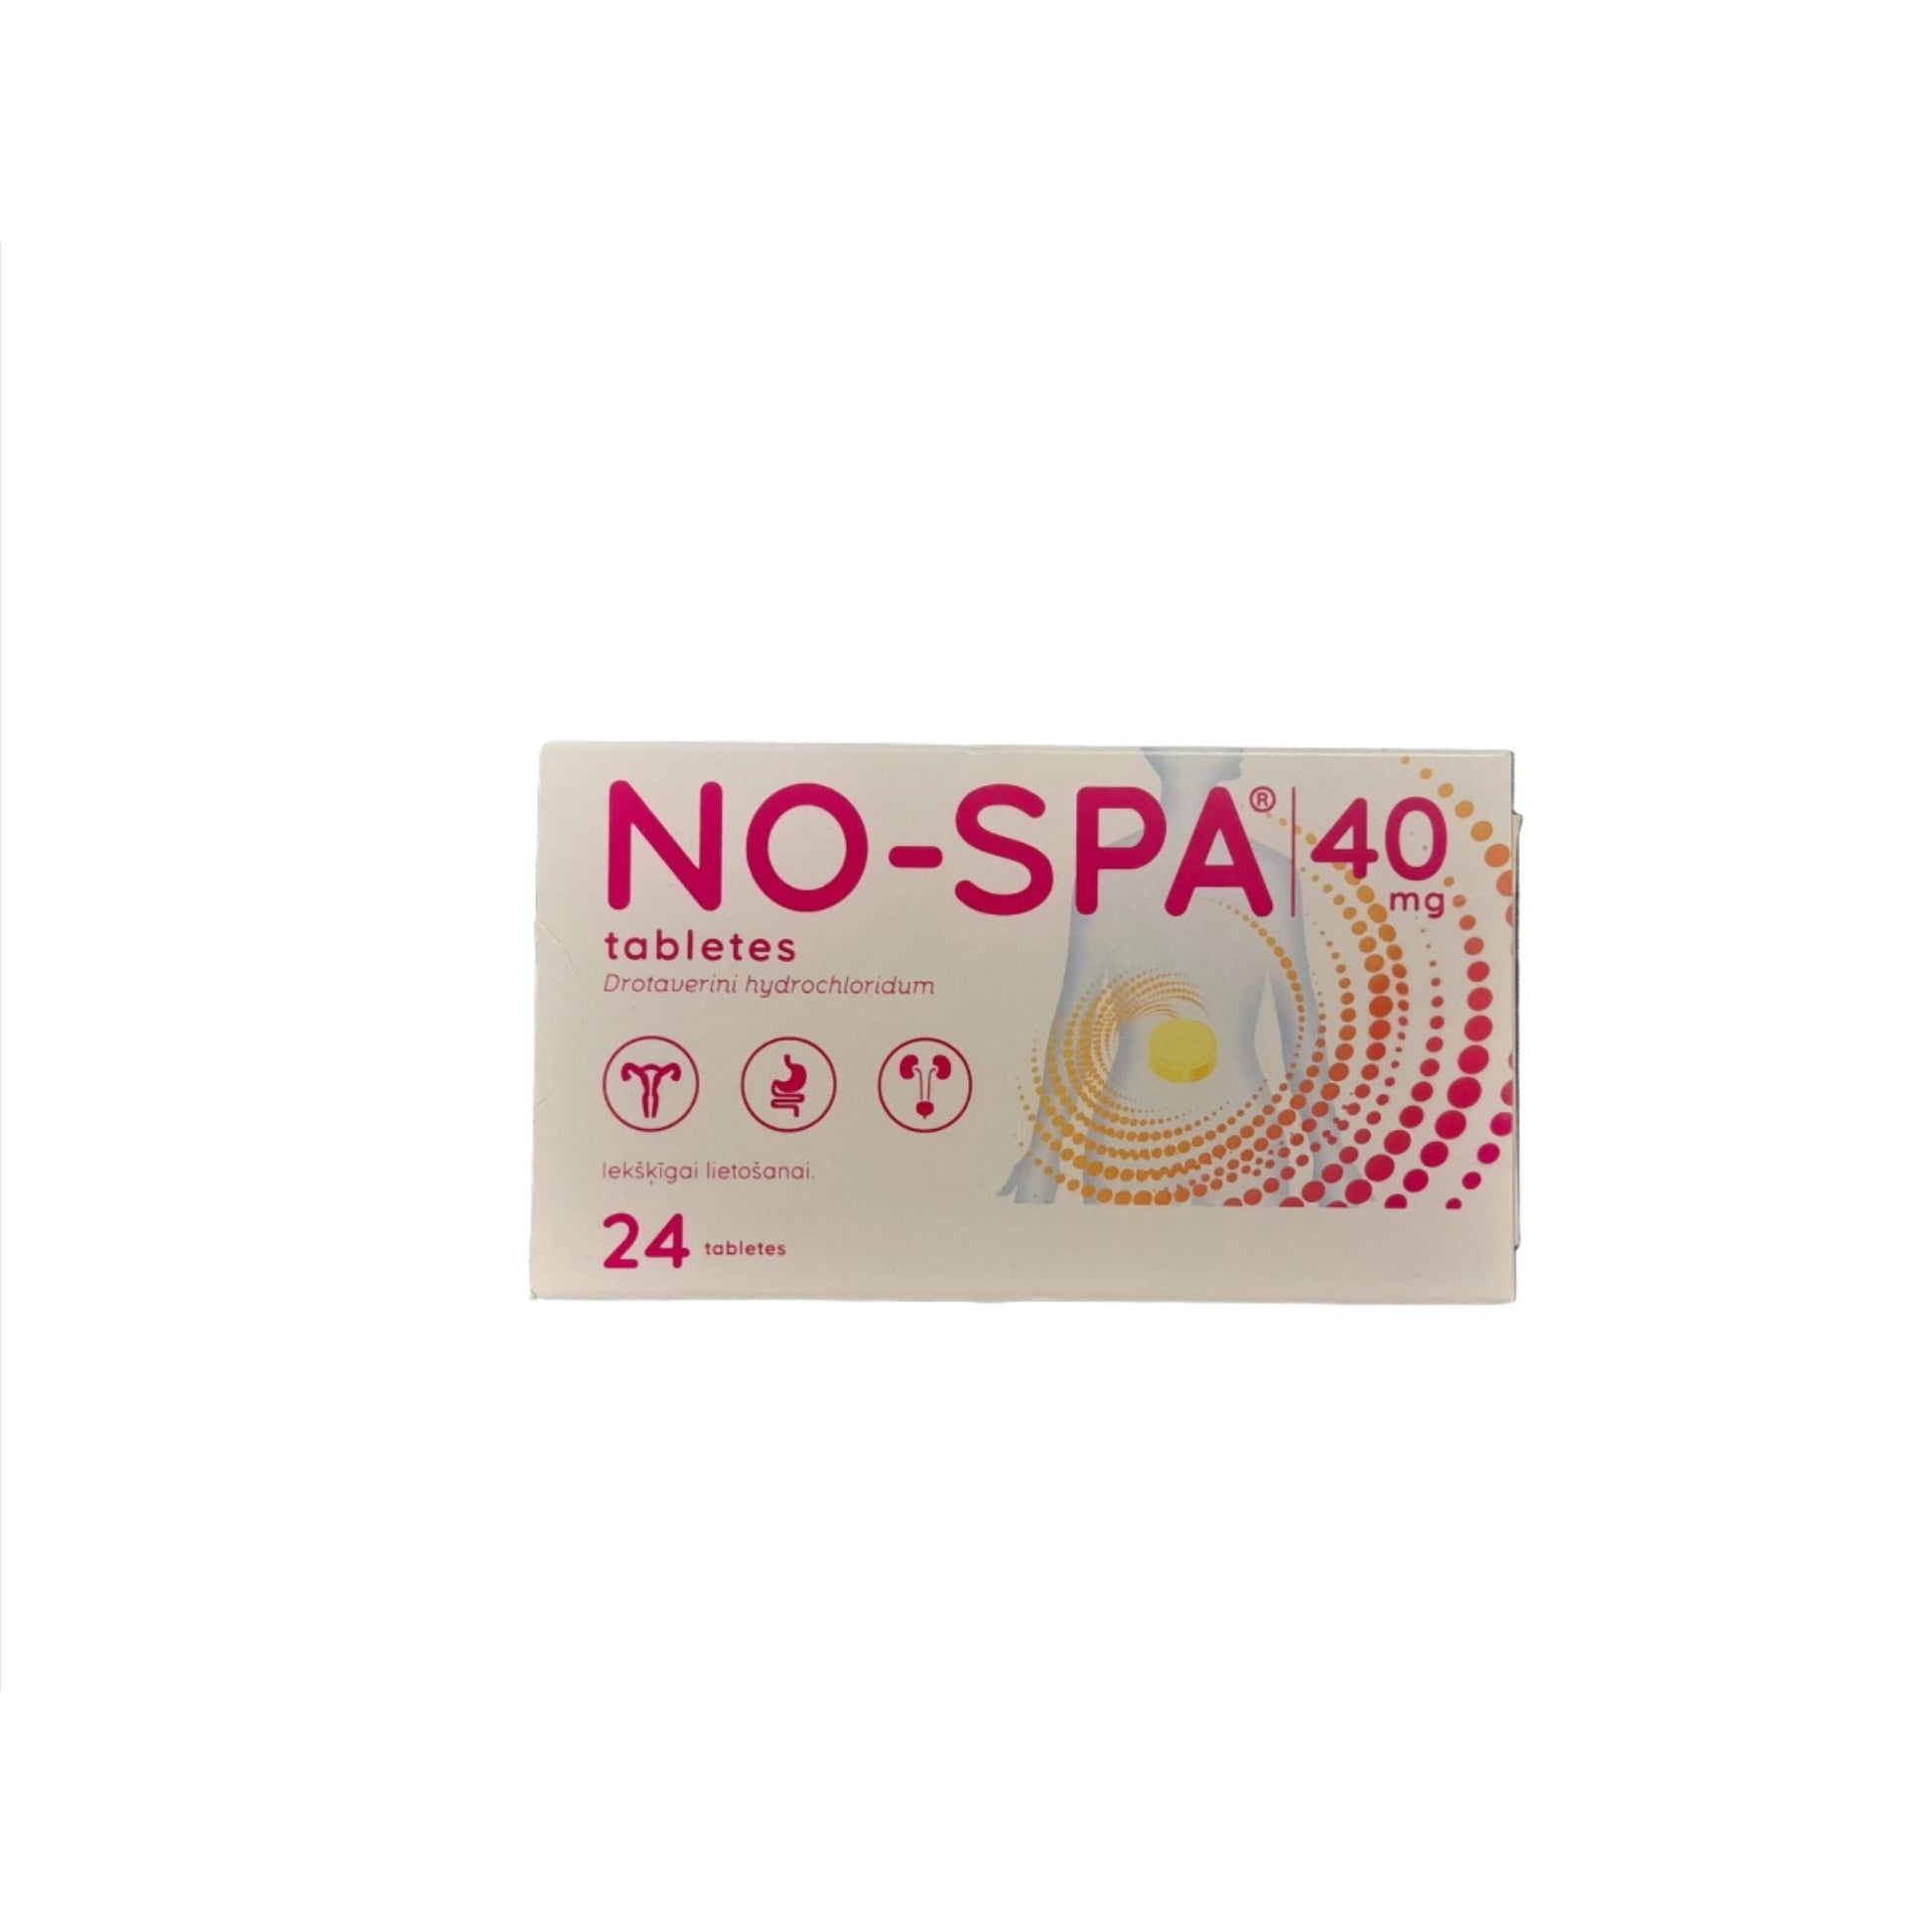 No - Spa, 40 mg, 24 comprimate, Sanofi - 3582910080268